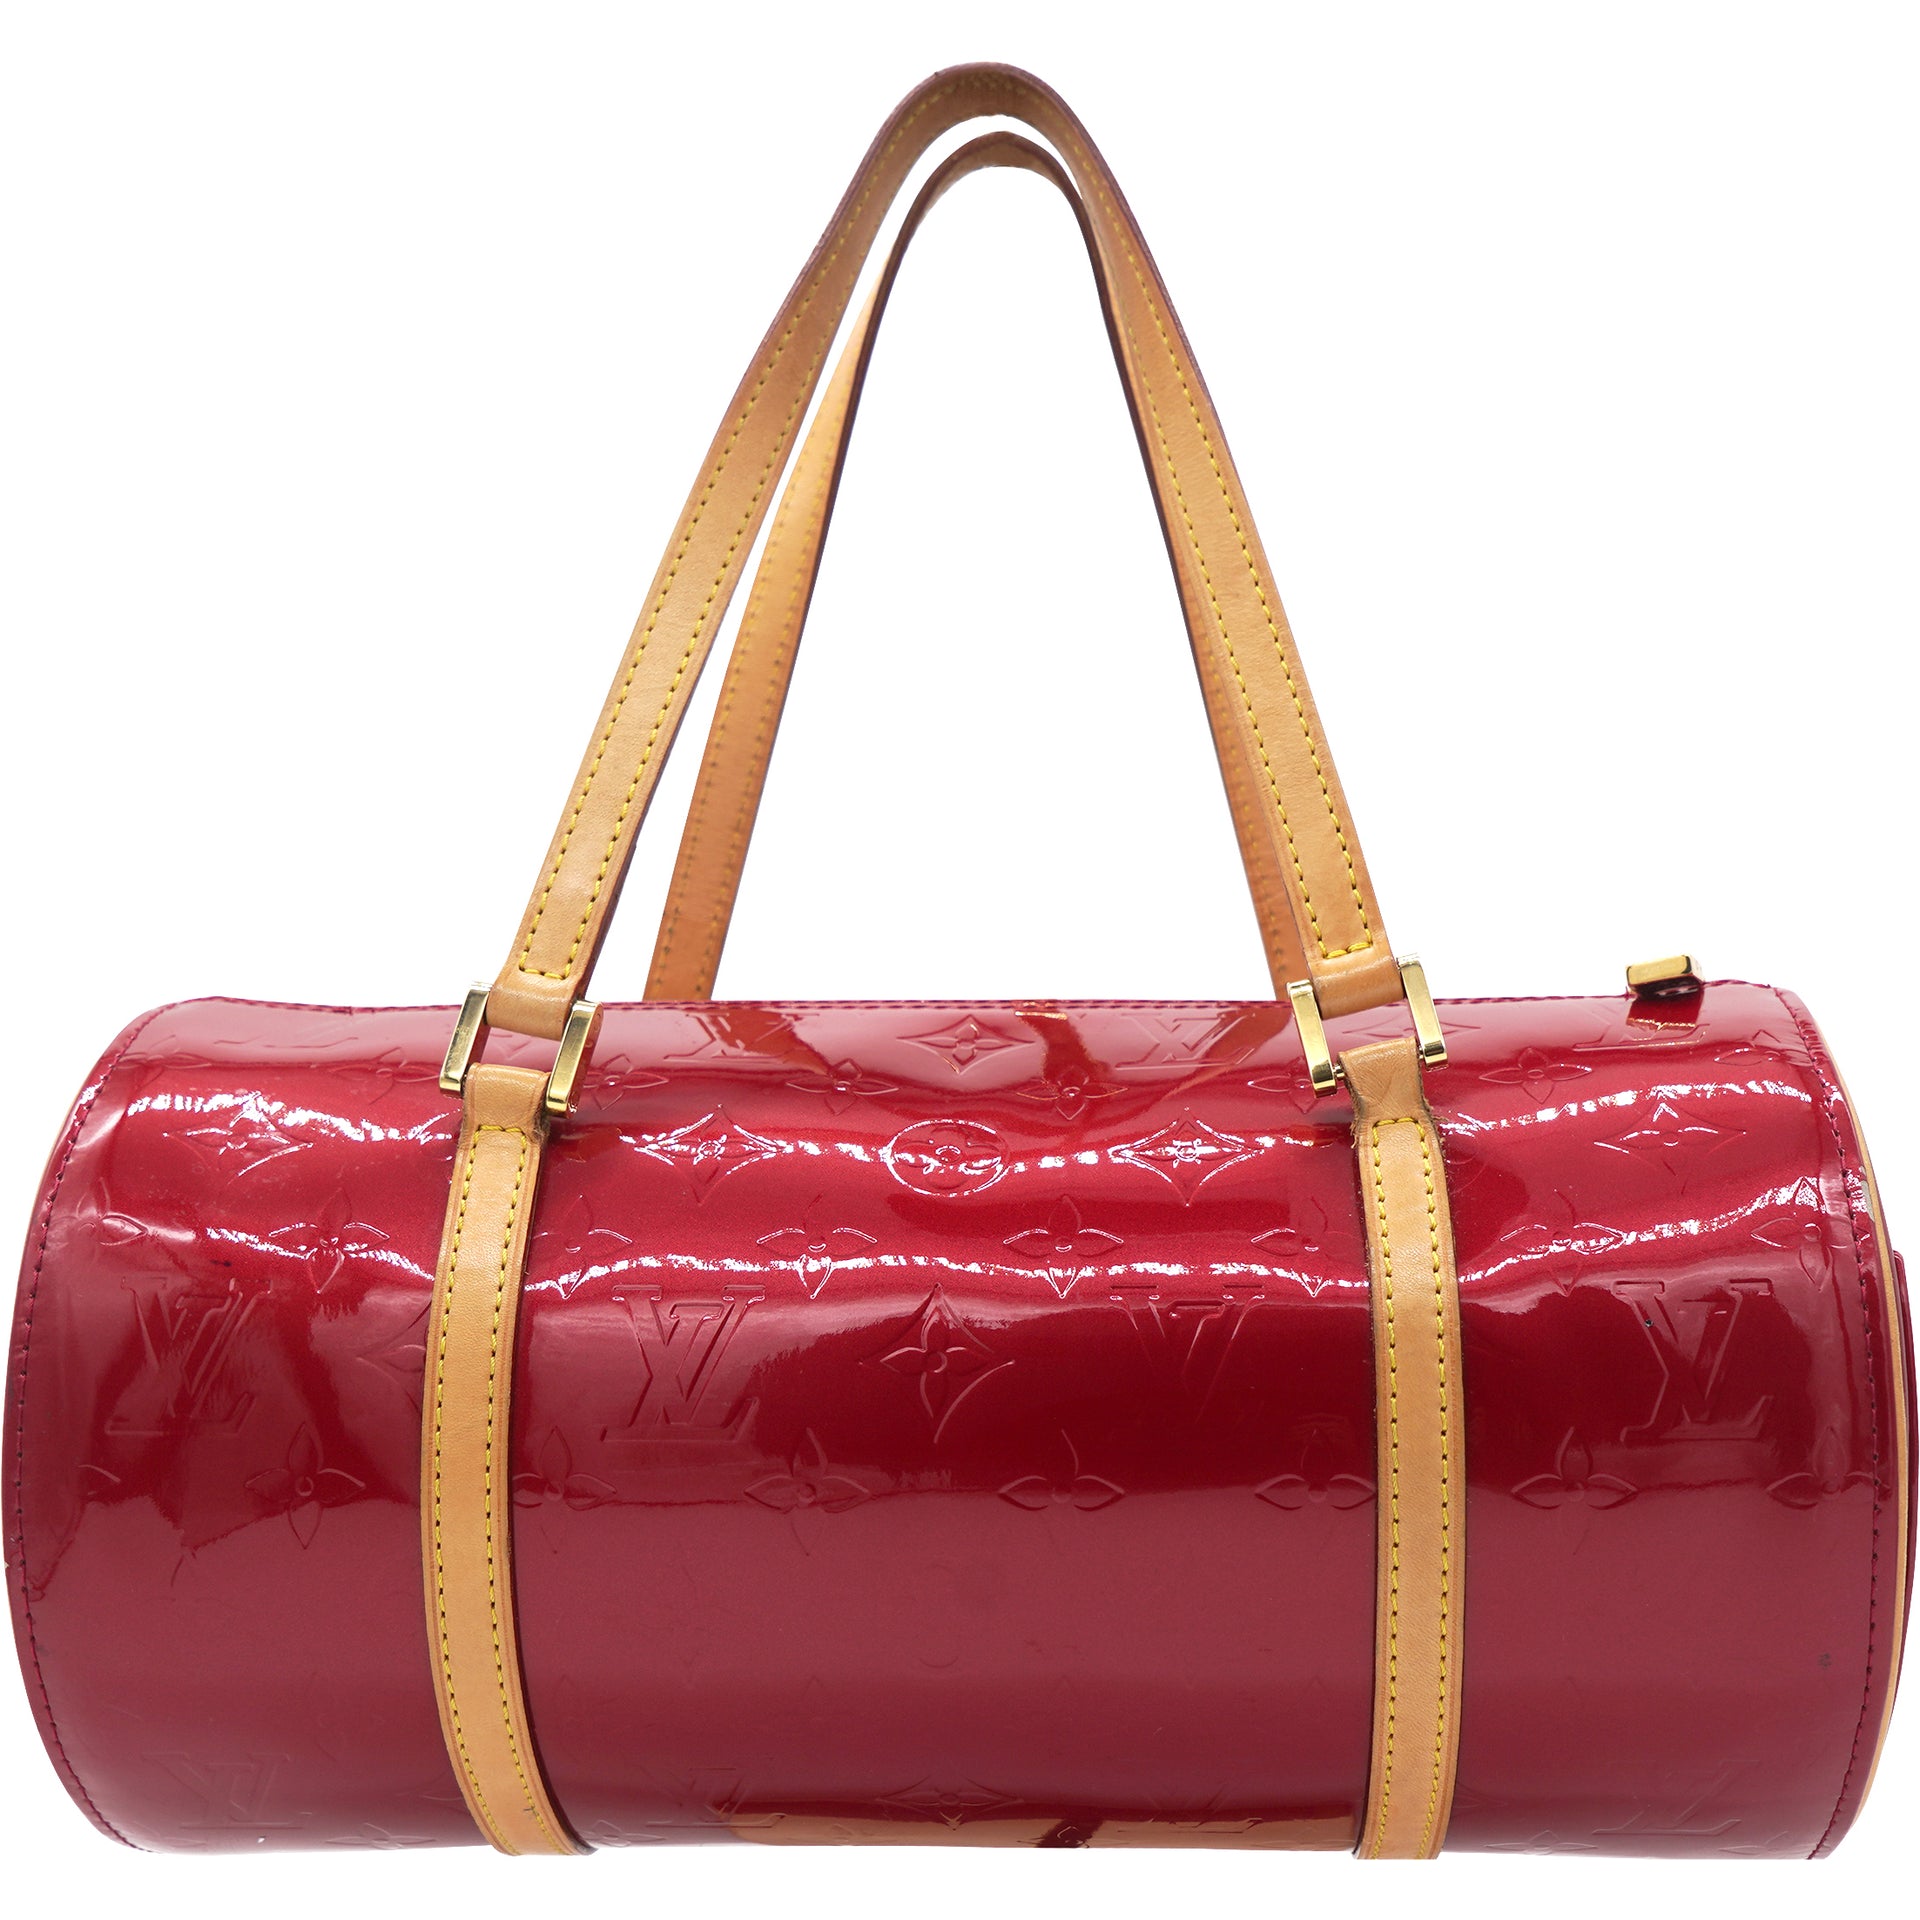 Louis Vuitton Bedford Monogram Vernis Patent Leather Shoulder Bag on SALE